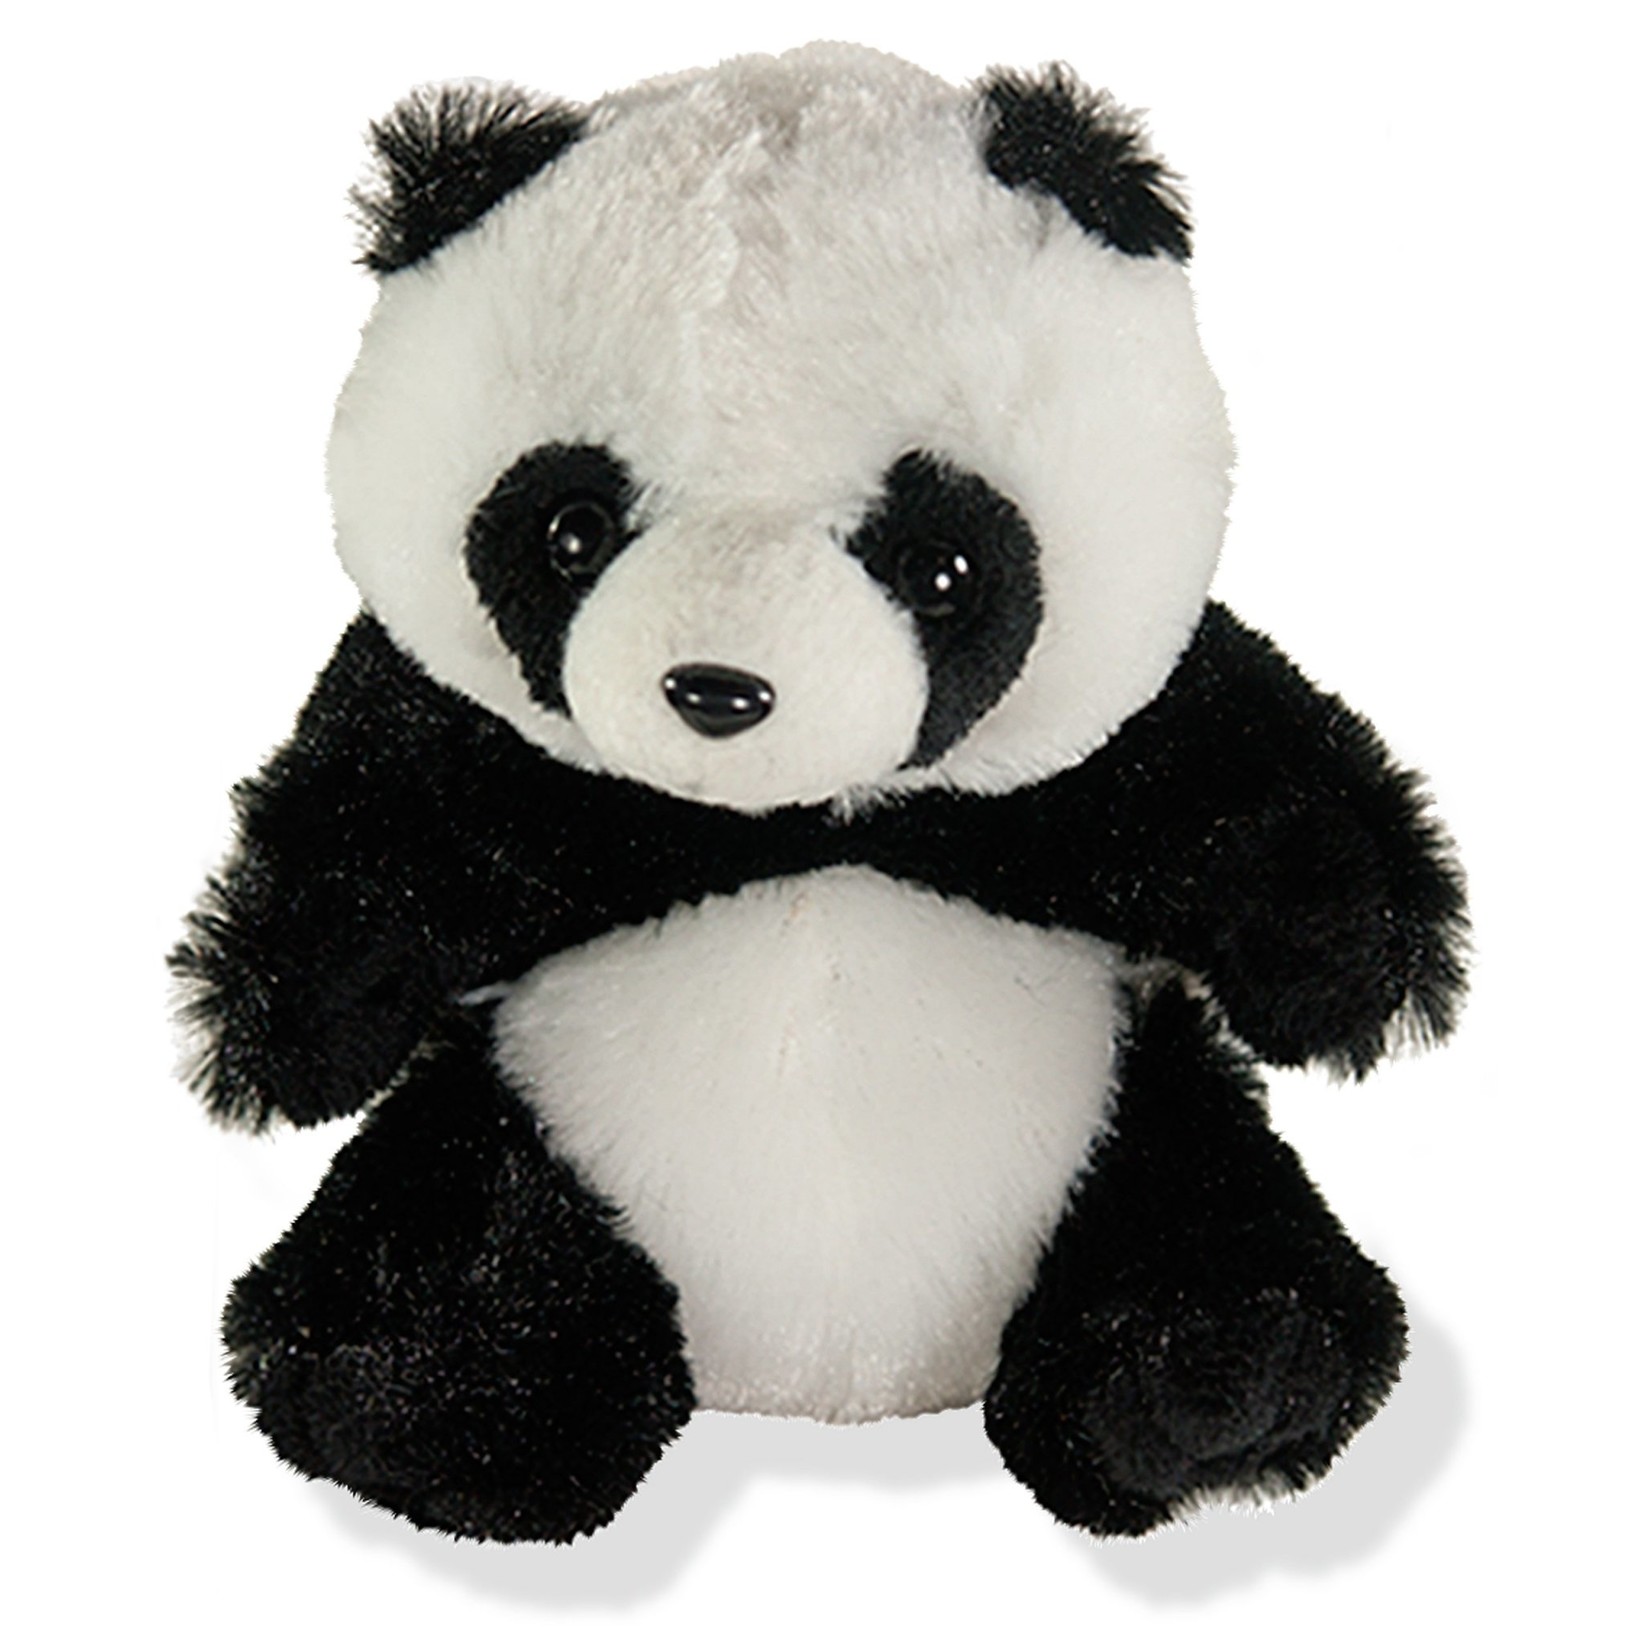 Hug a Panda Kit